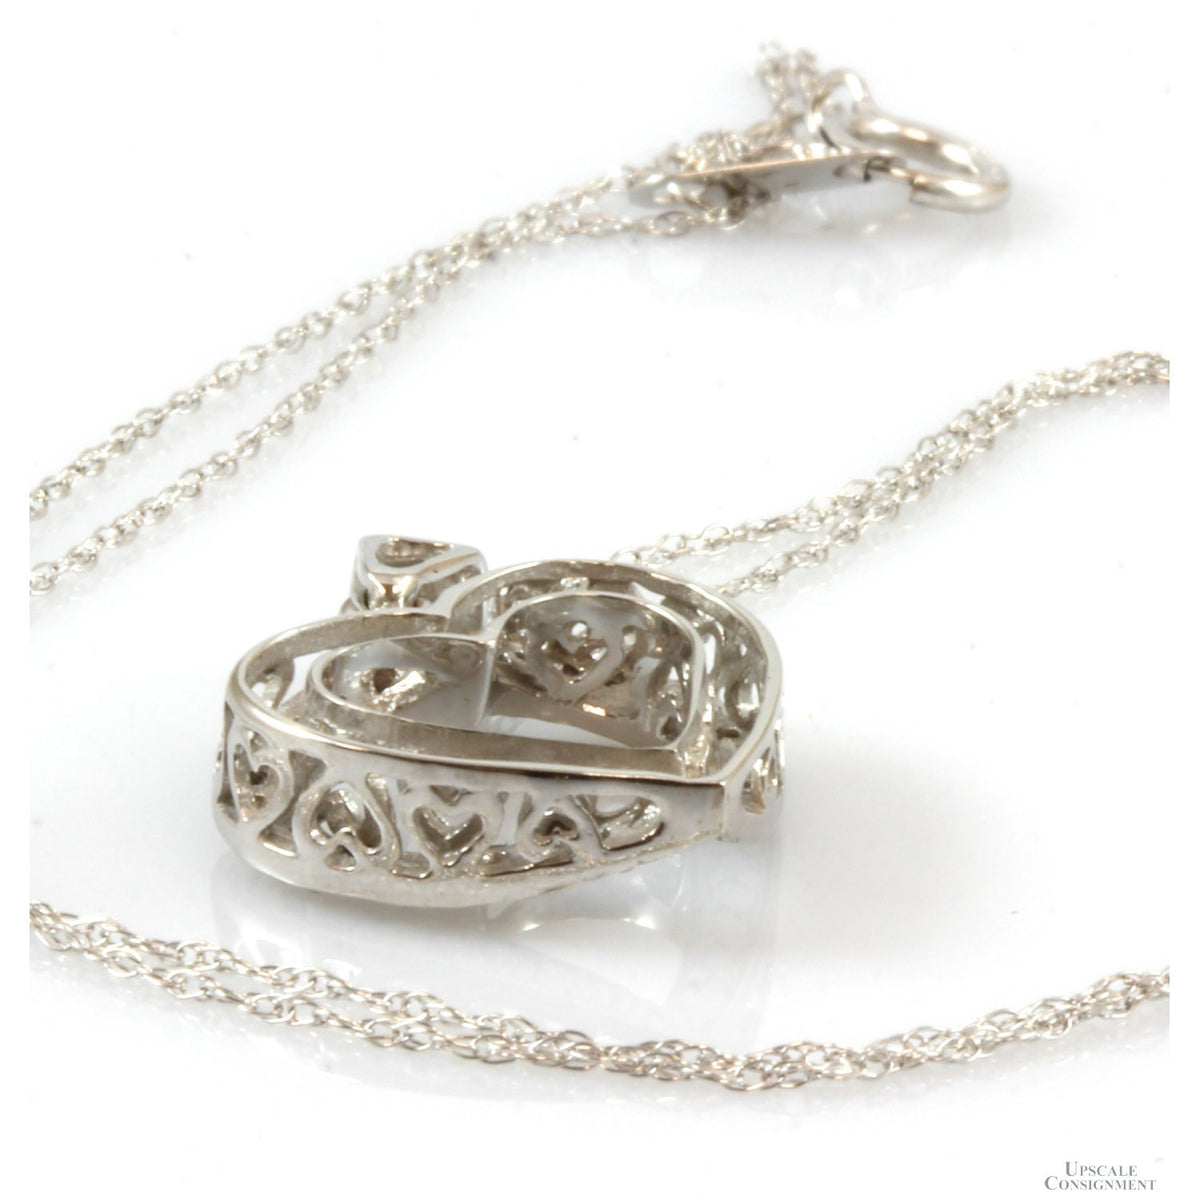 10K White Gold Diamond Heart Pendant & 18" Chain Necklace